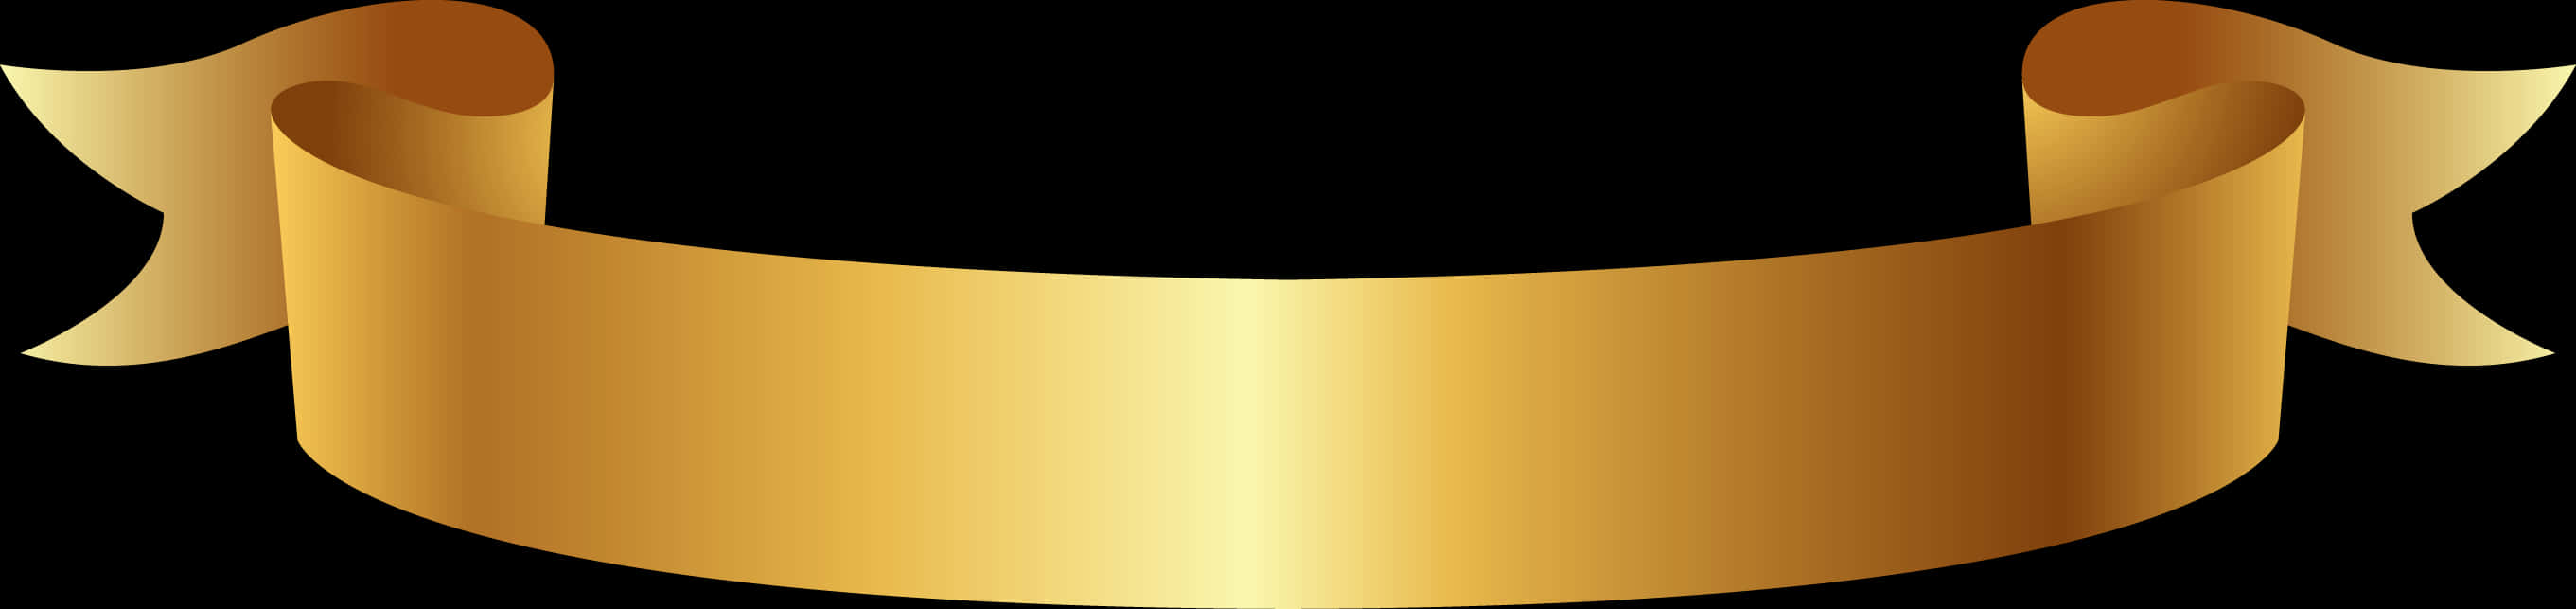 Gold Ribbon Banner Clip Art